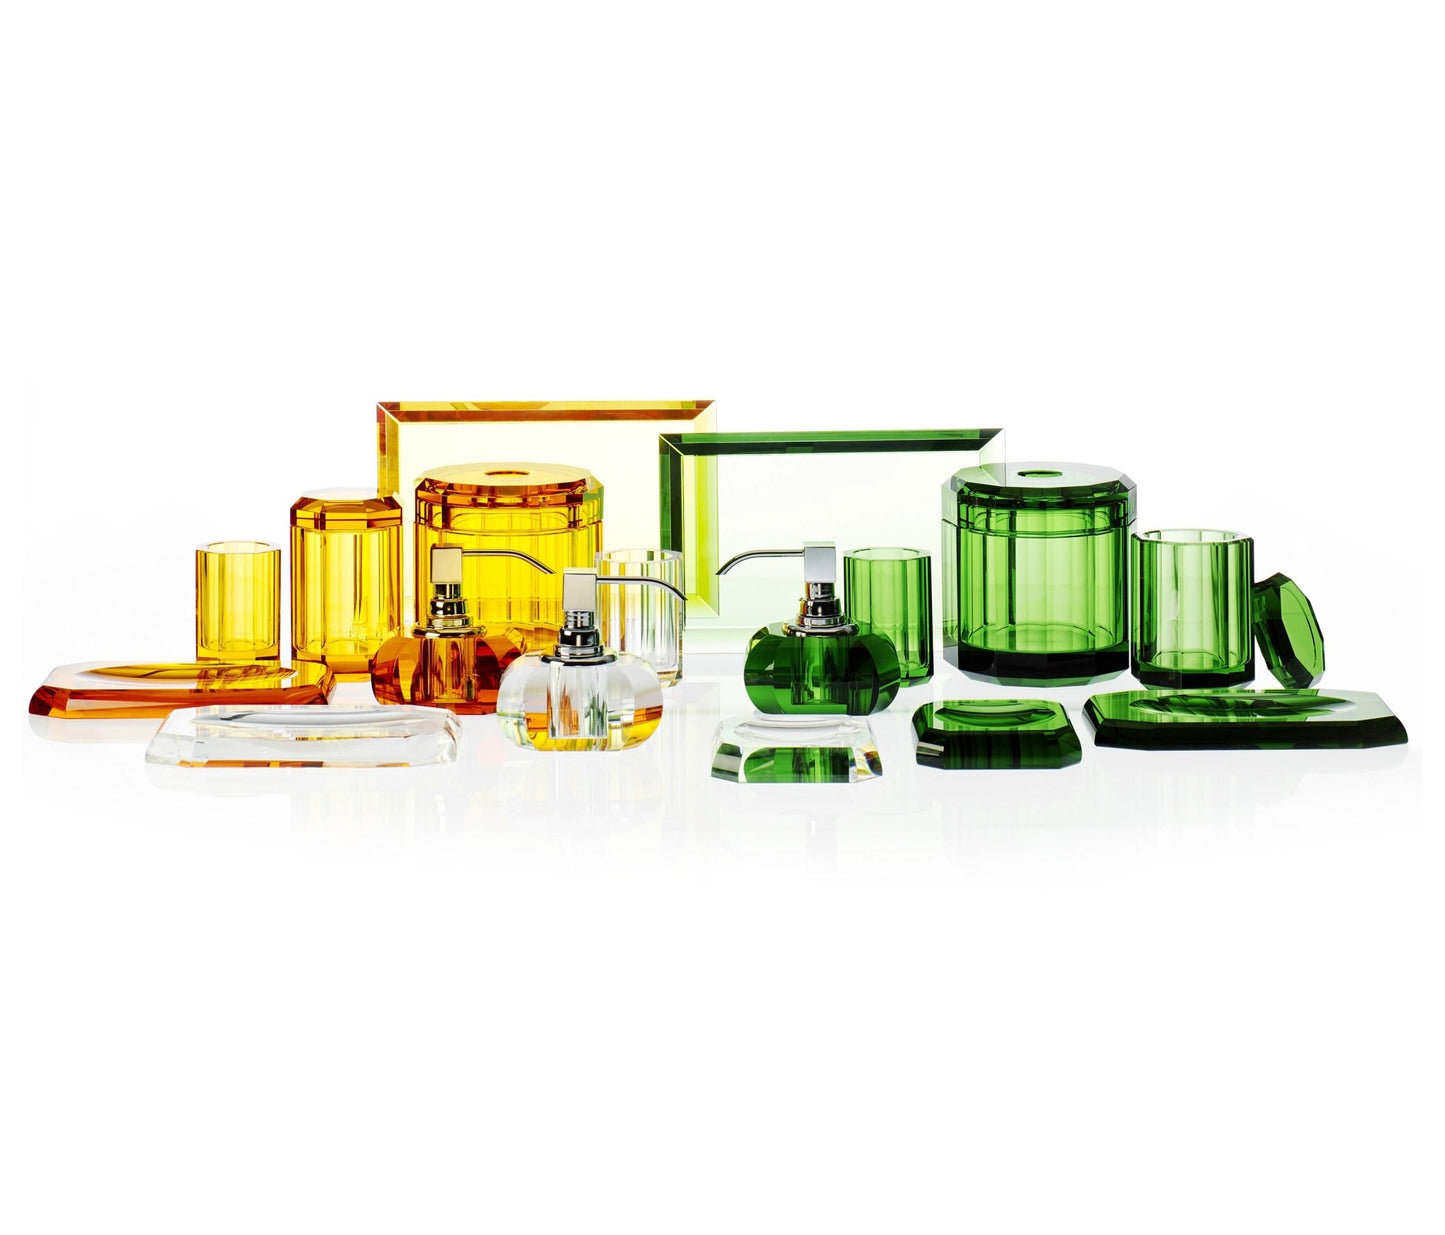 Luxury Matt Gold Glass Liquid Soap Dispenser | Crystal Clear - |VESIMI Design| Luxury and Rustic bathrooms online